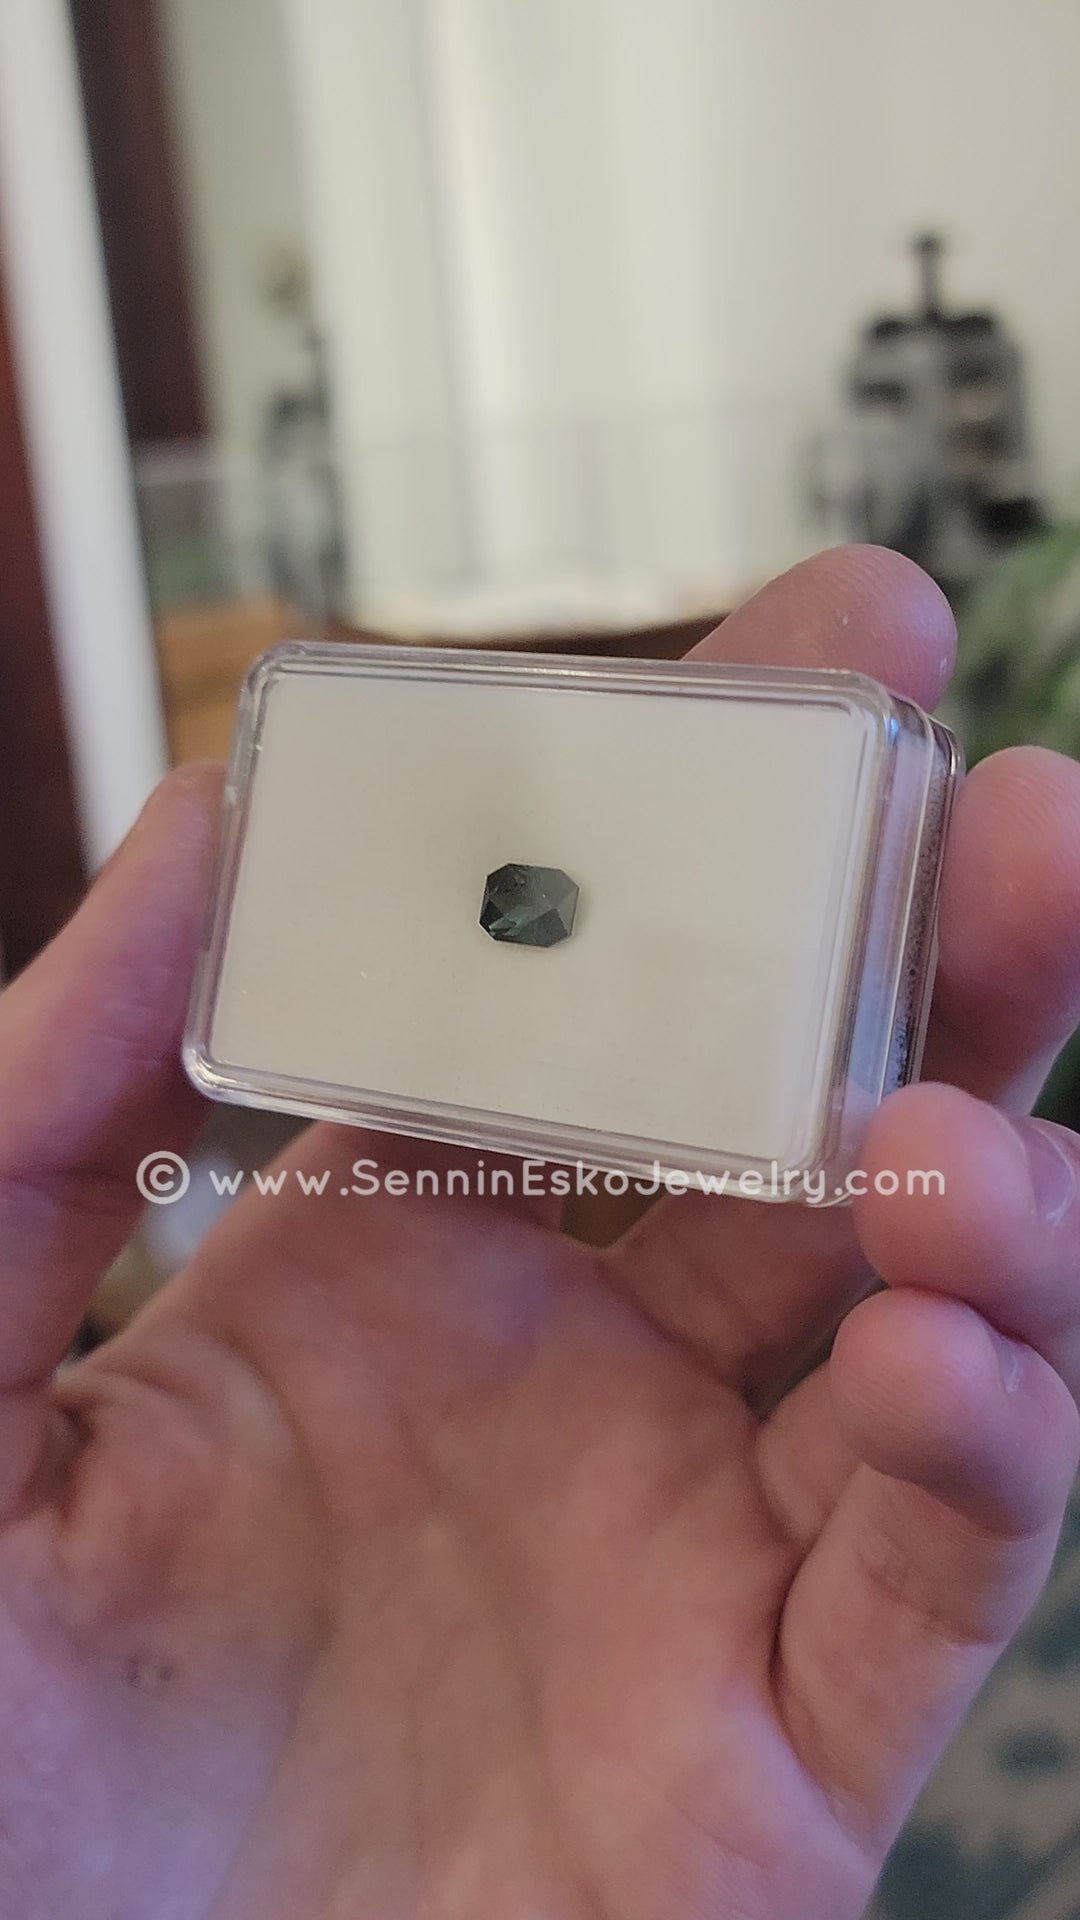 Octogone saphir bleu marine/vert encre 1,6 carat - 7,8 x 5,8 mm, taille fantaisie